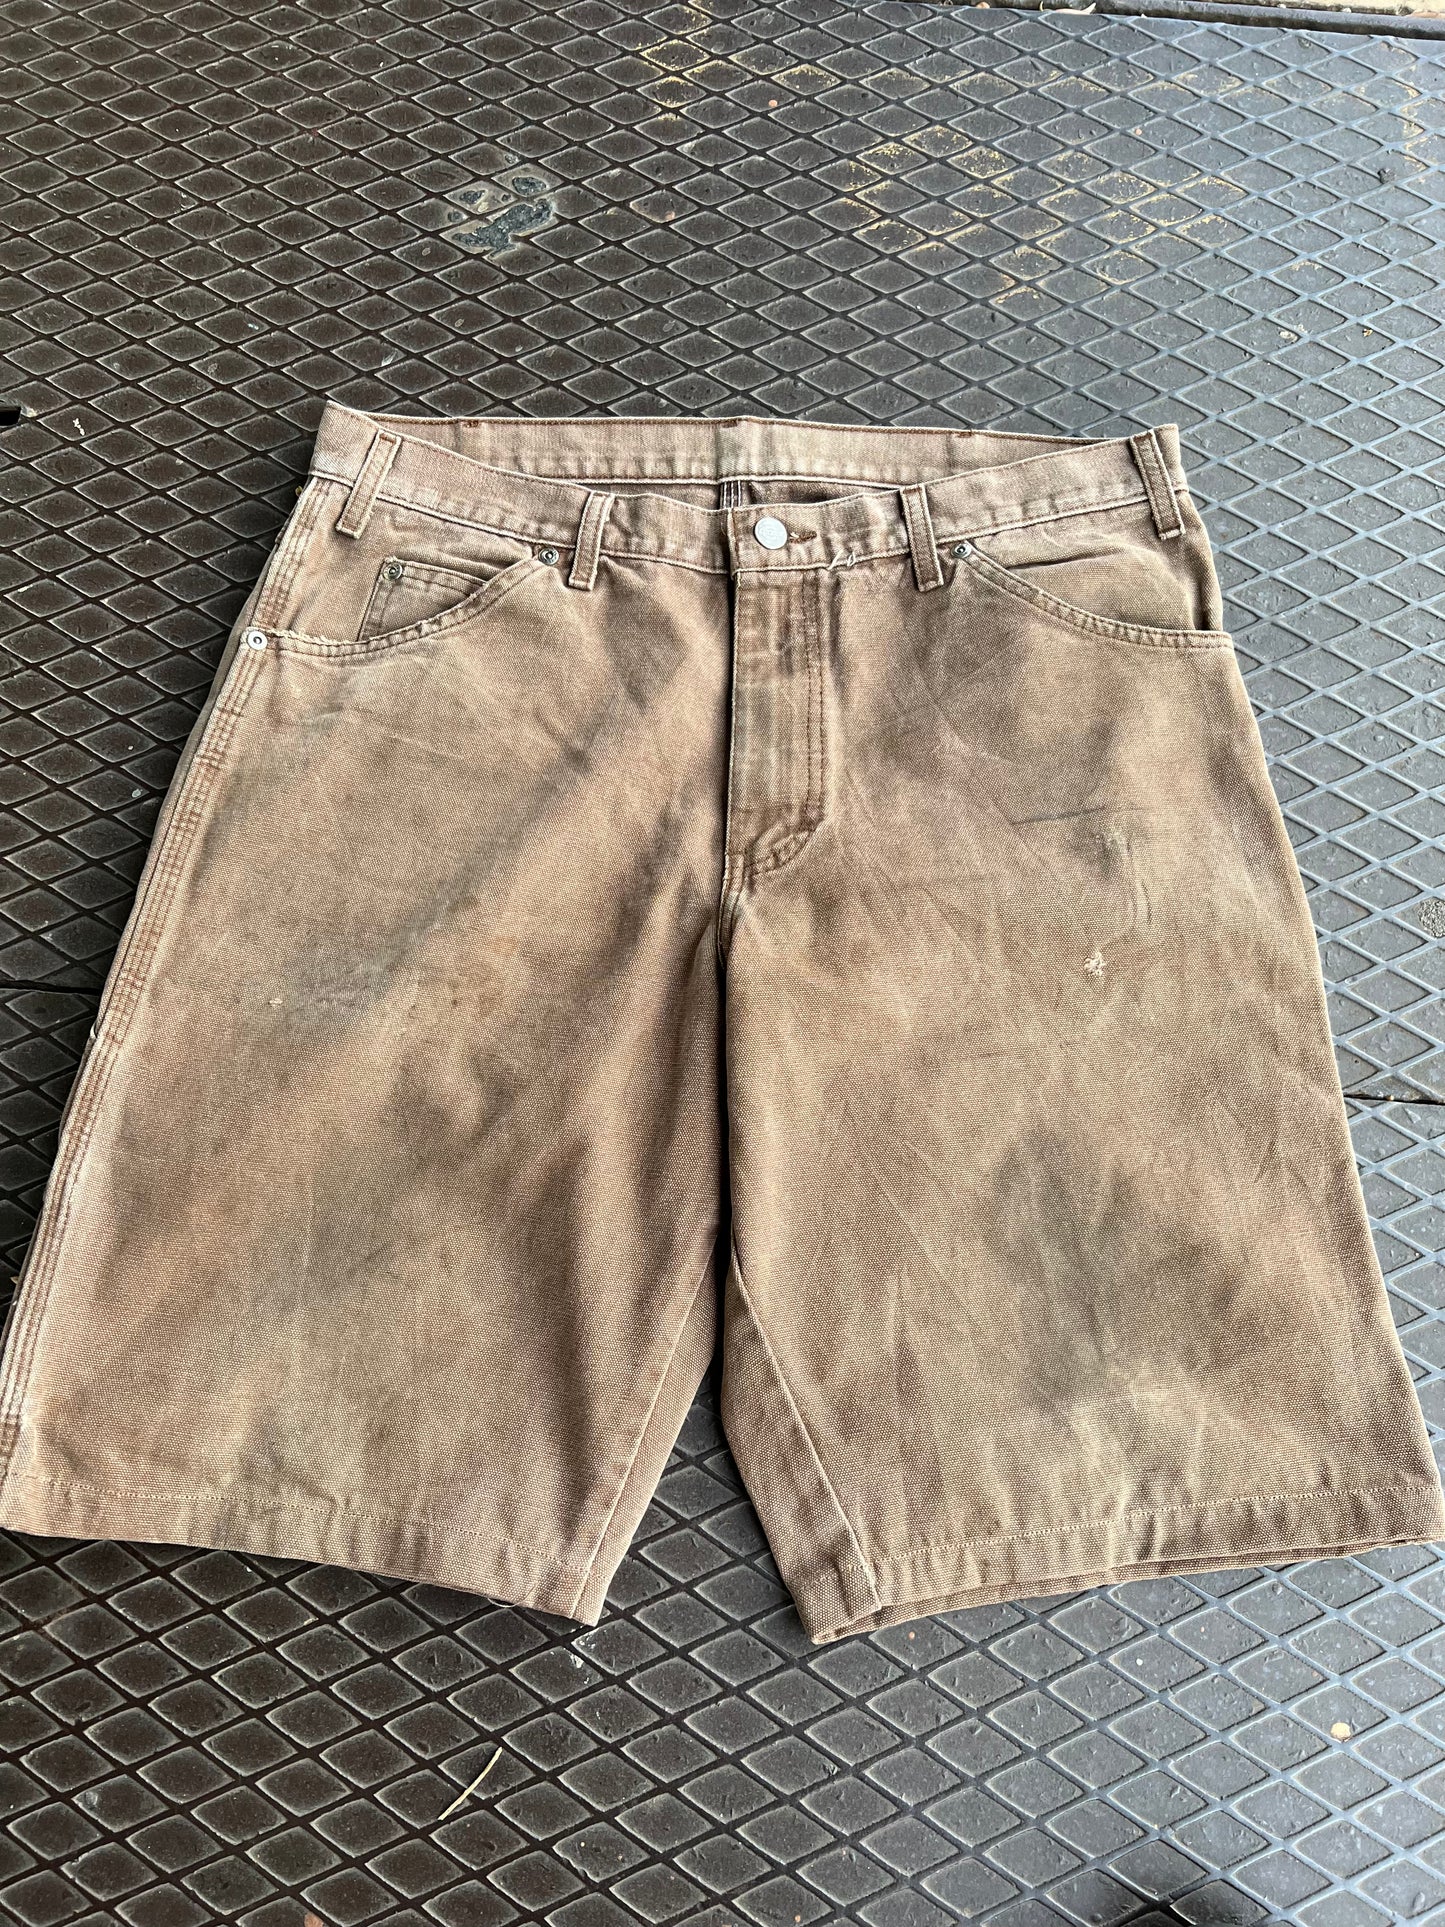 34 - Dickies Chocolate Brown Carpenter Shorts